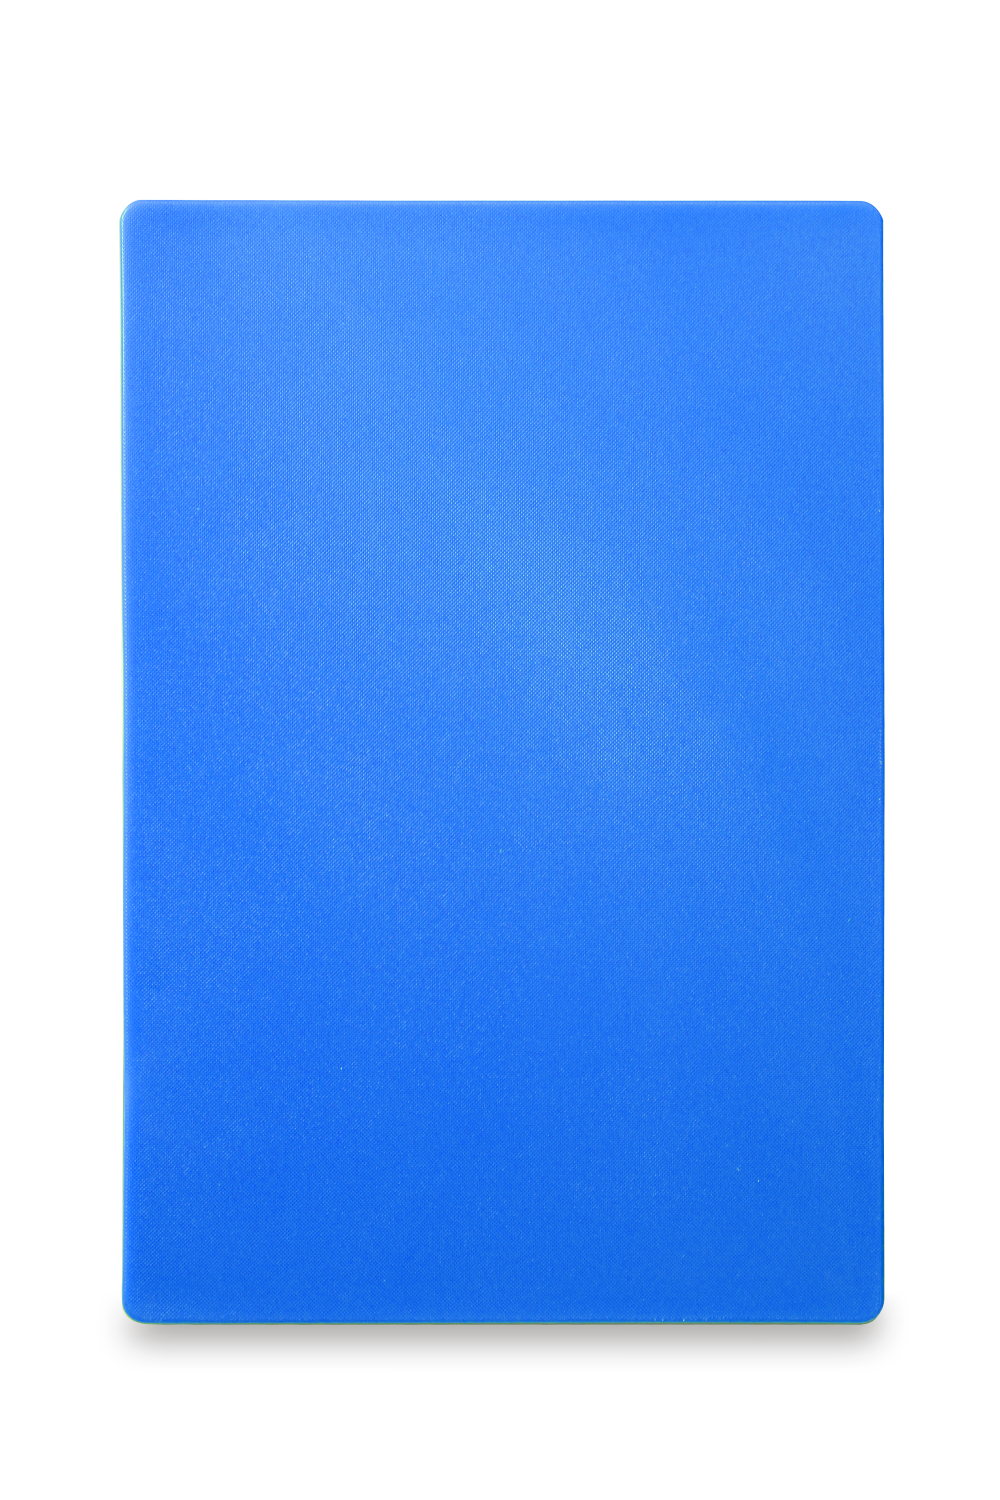 HACCP-Blau Schneidbrett 600x400mm